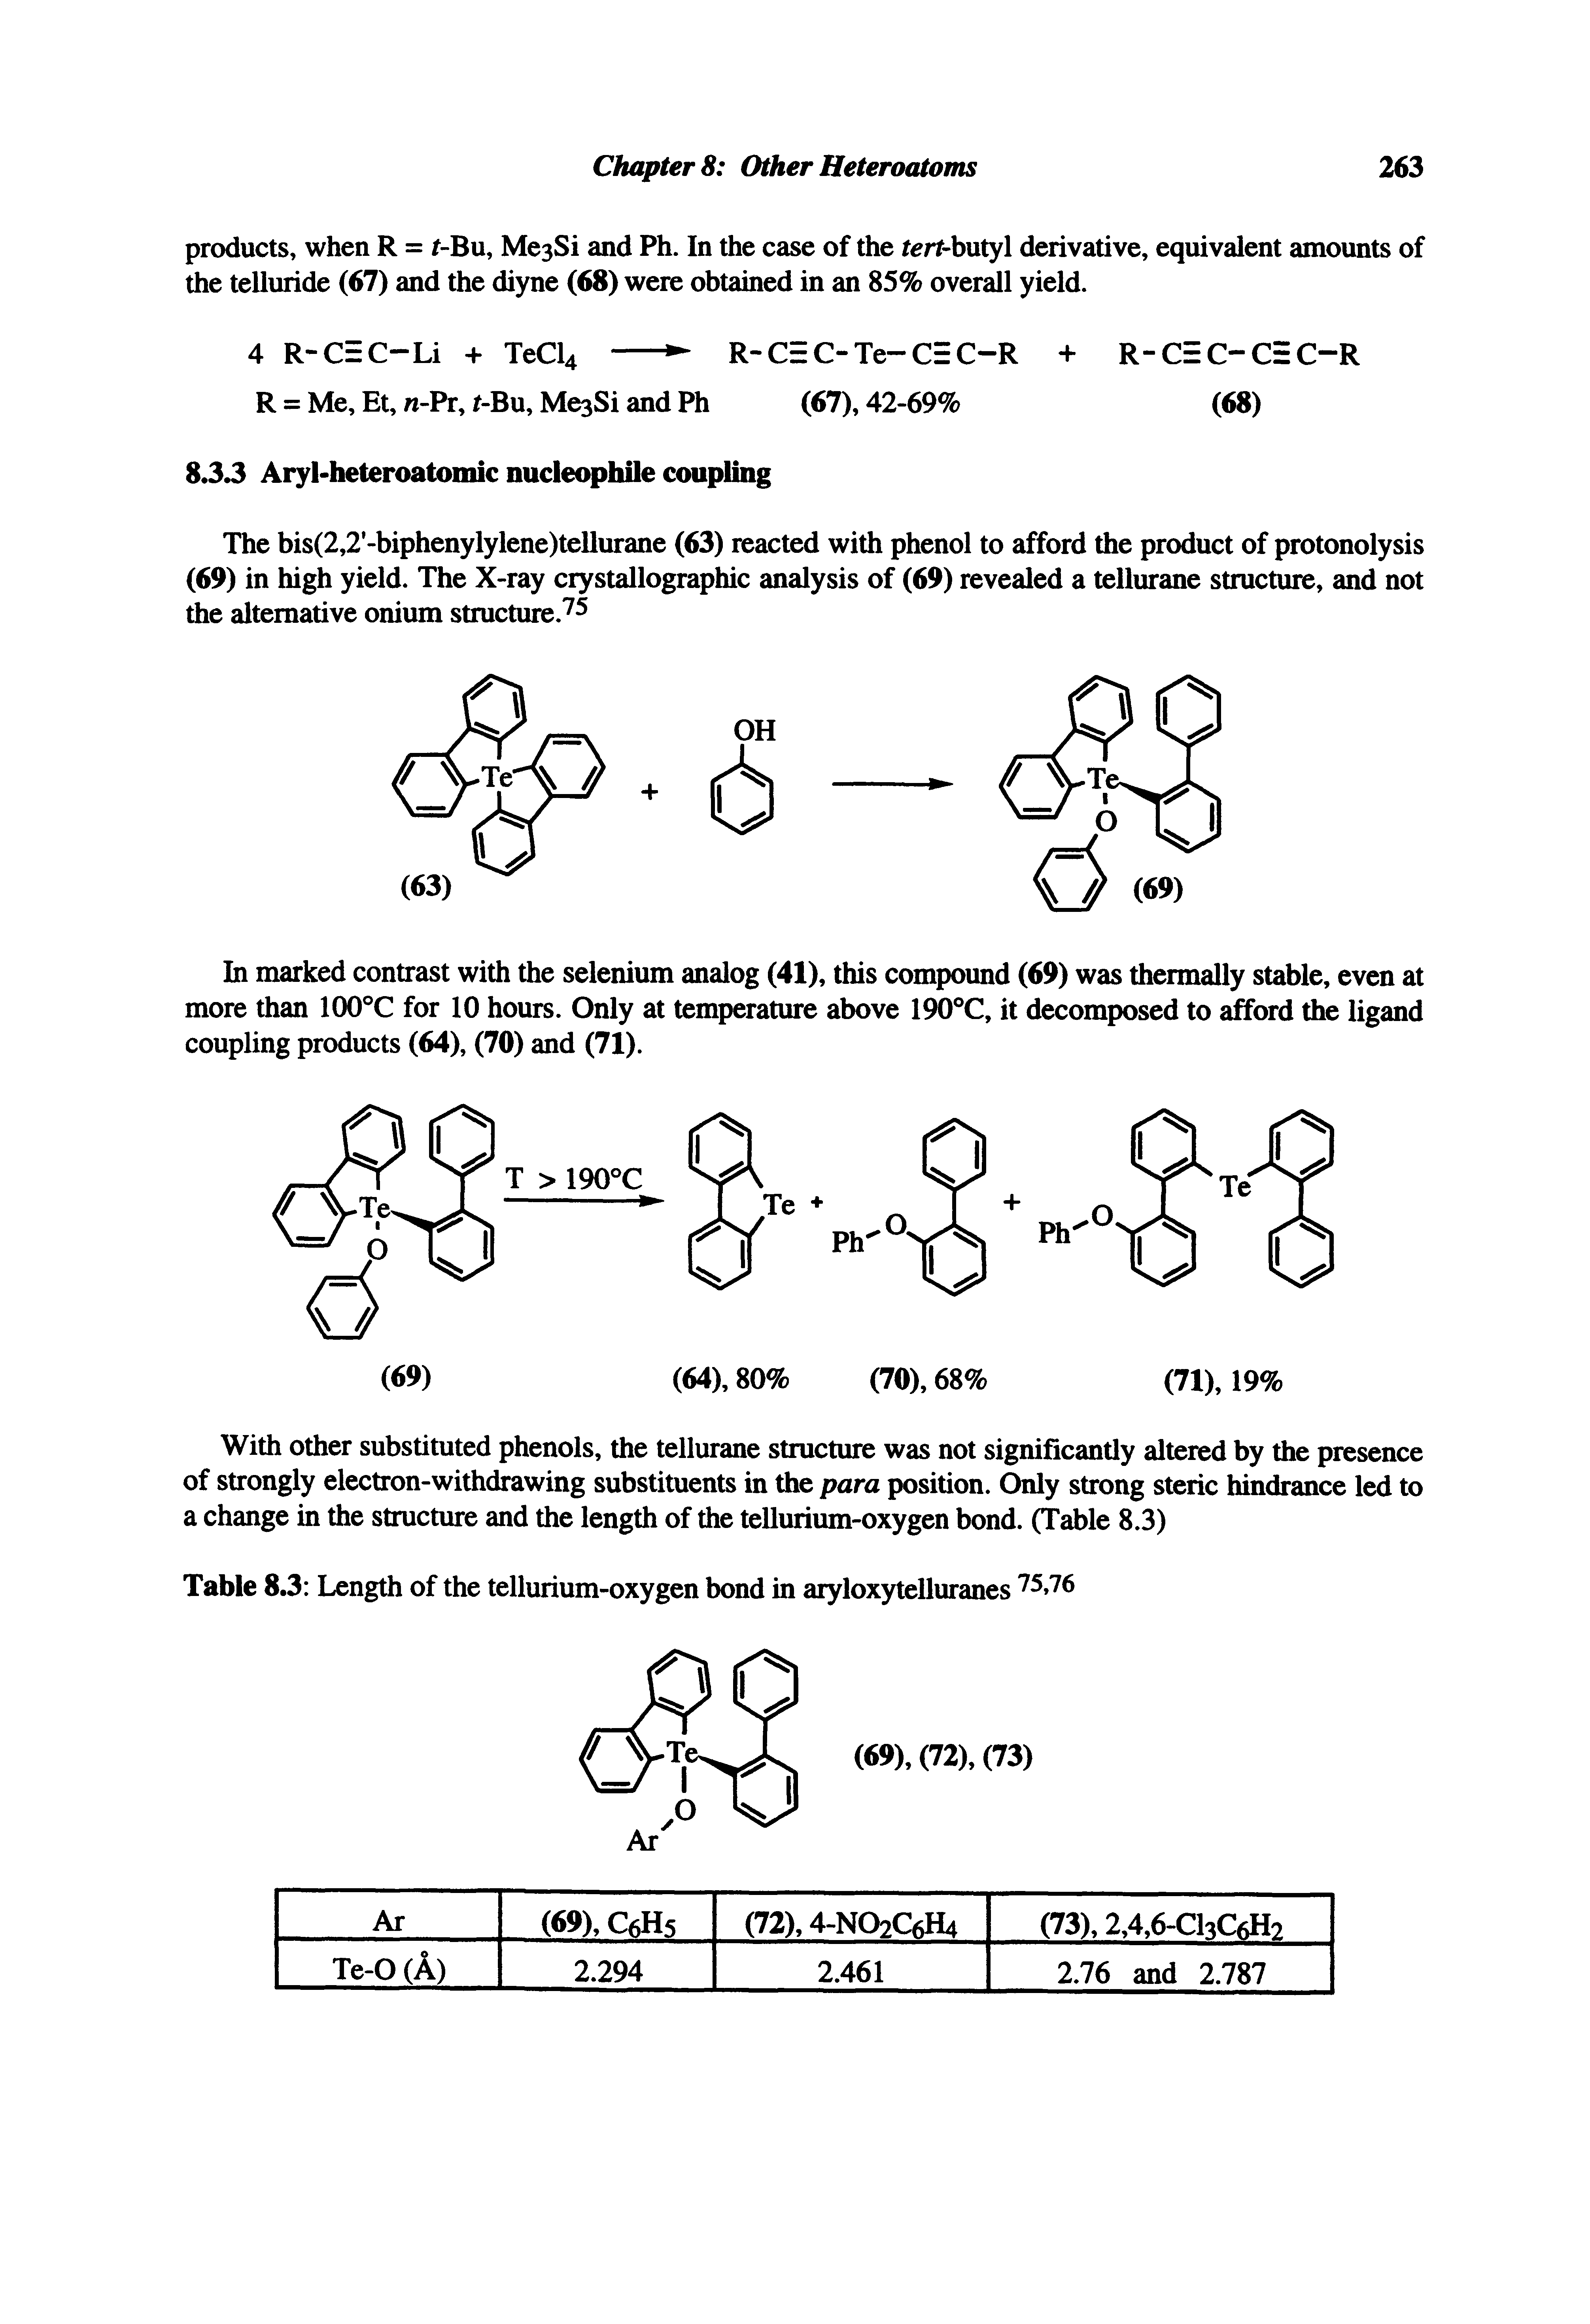 Table 8.3 Length of the tellurium-oxygen bond in aryloxytelluranes...